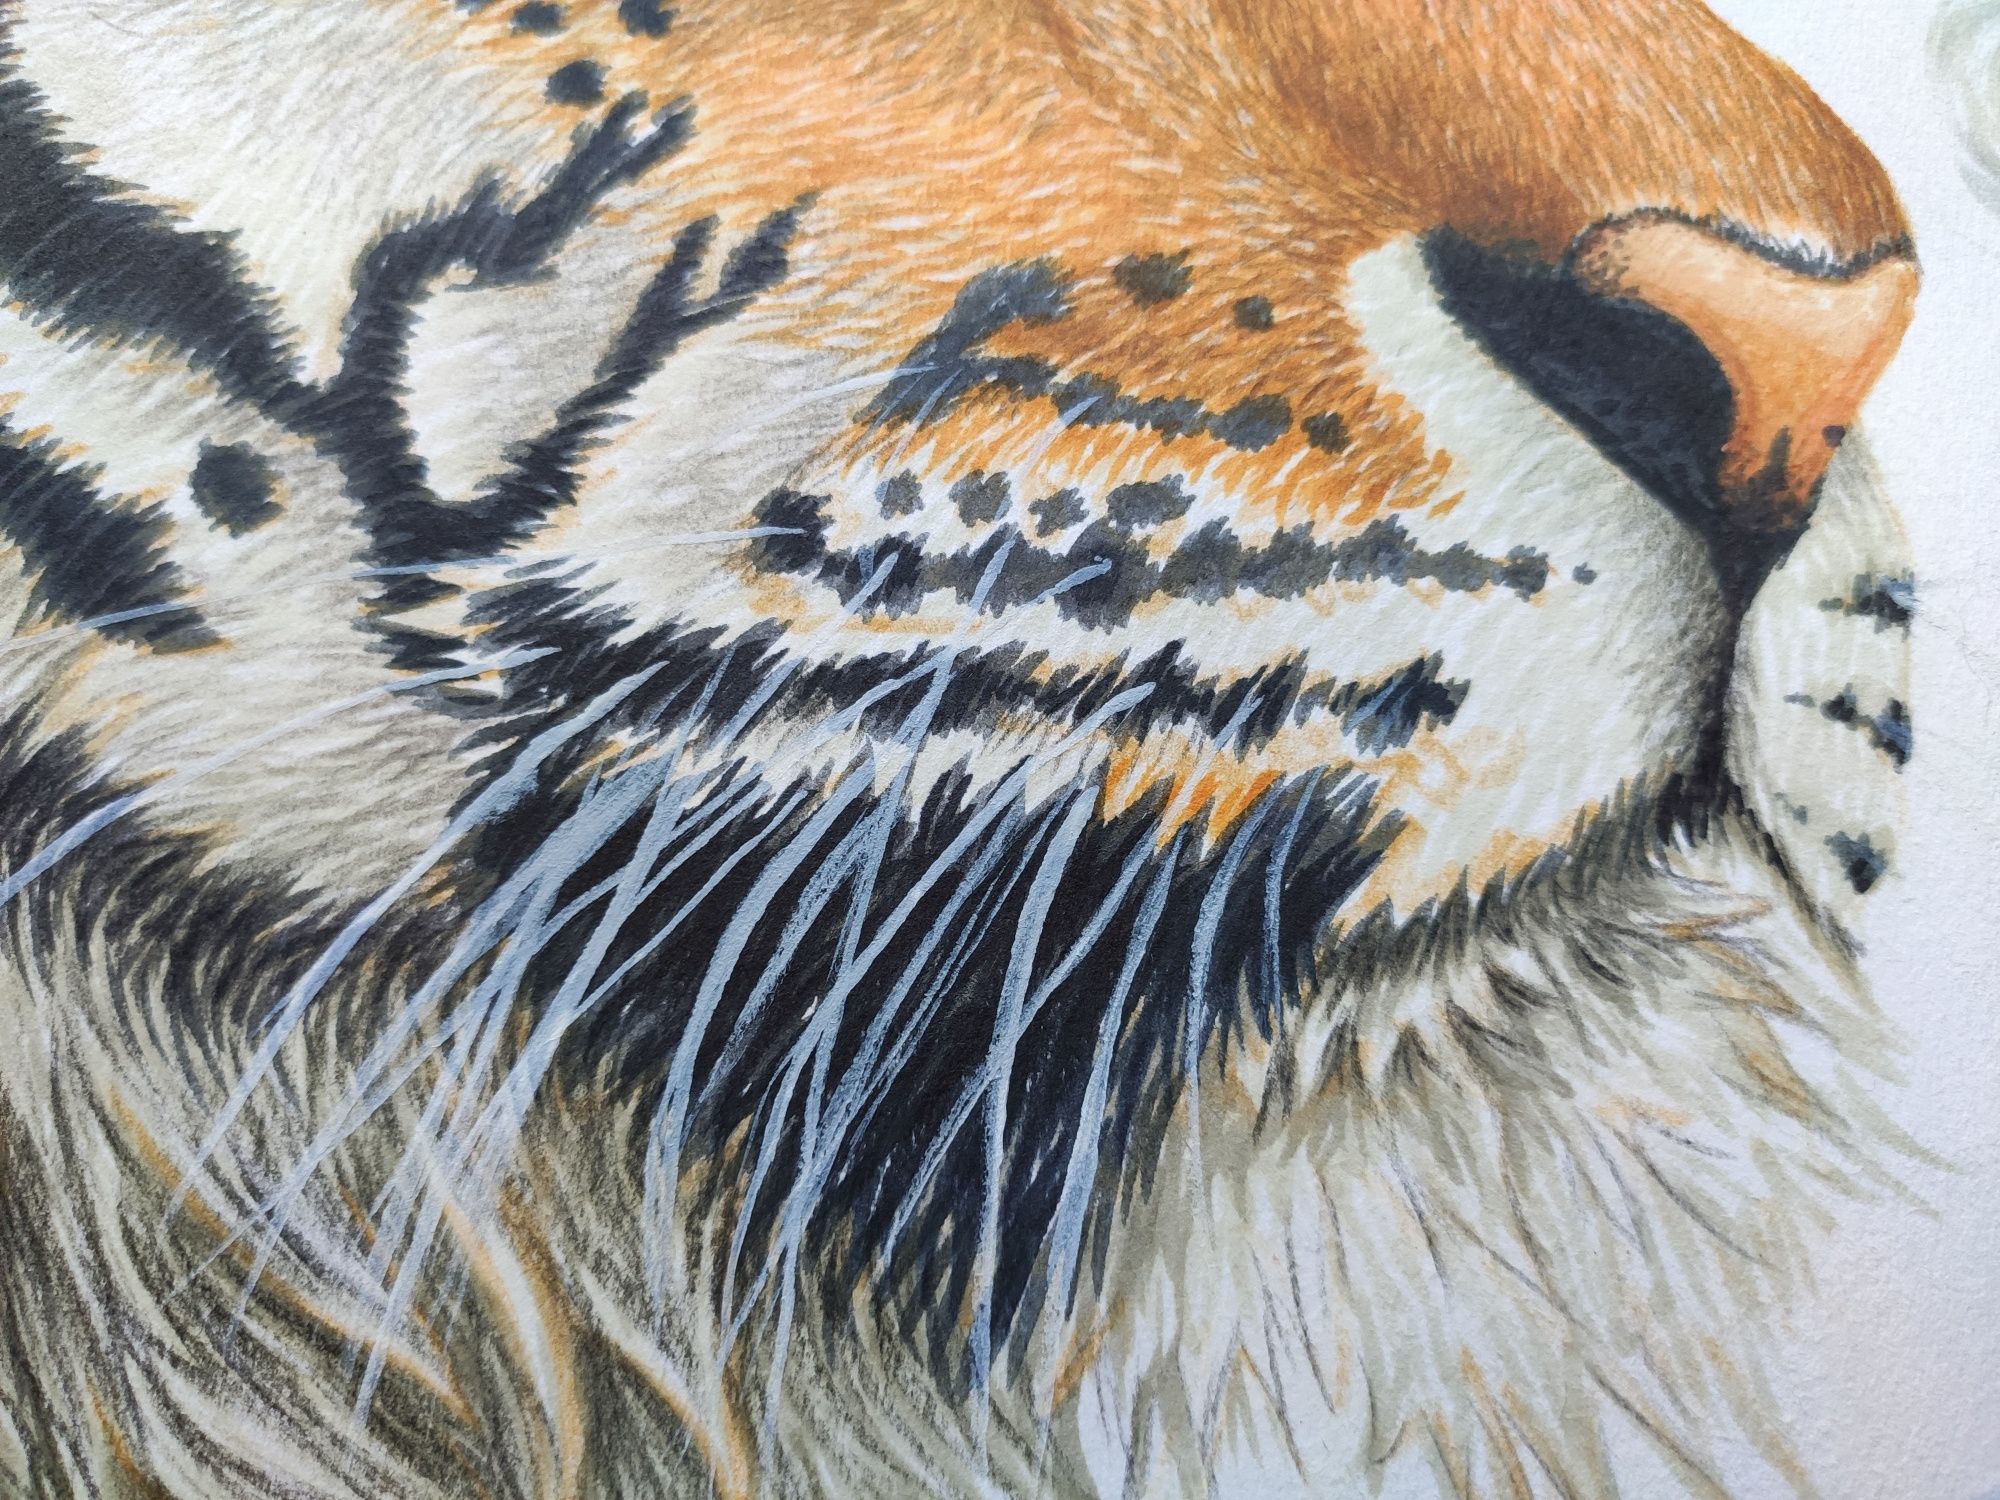 Картина а3 маркером тигр